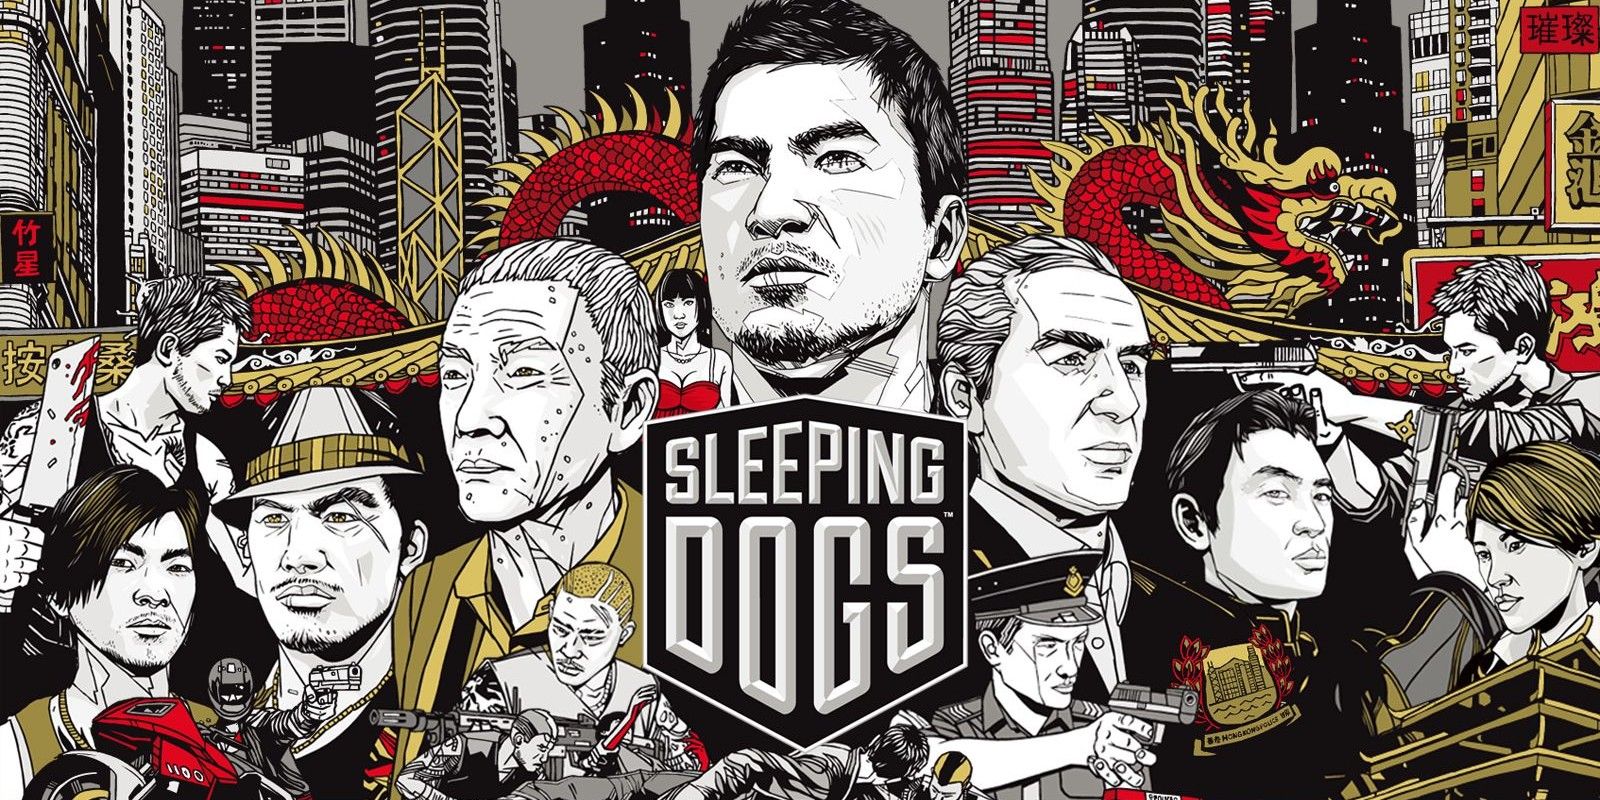 Sleeping Dogs - A Hong Kong Style GTA Version (Original Content